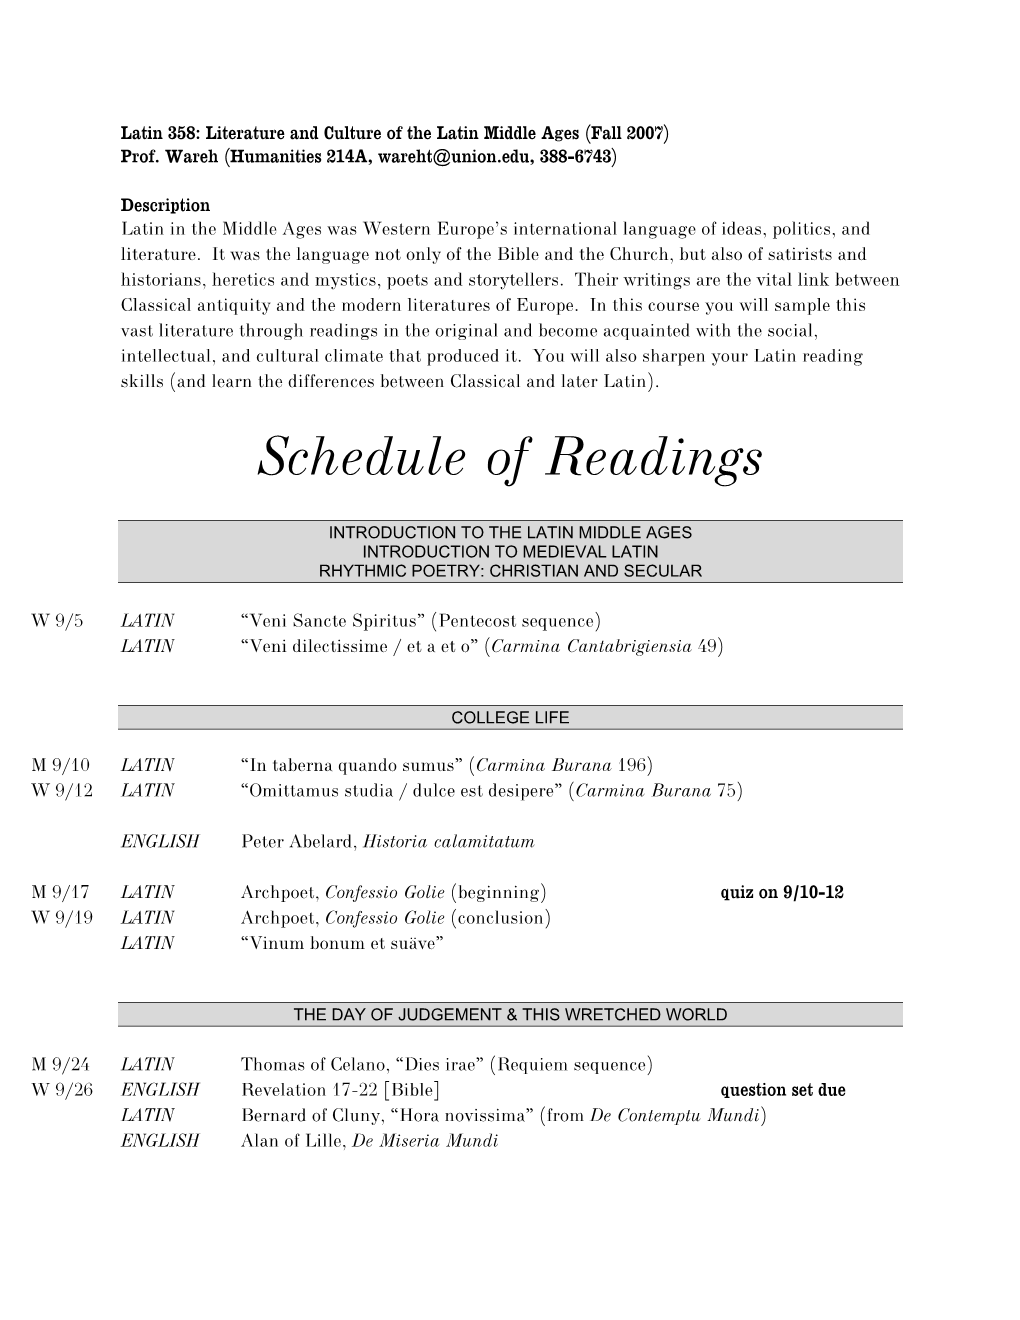 Schedule of Readings